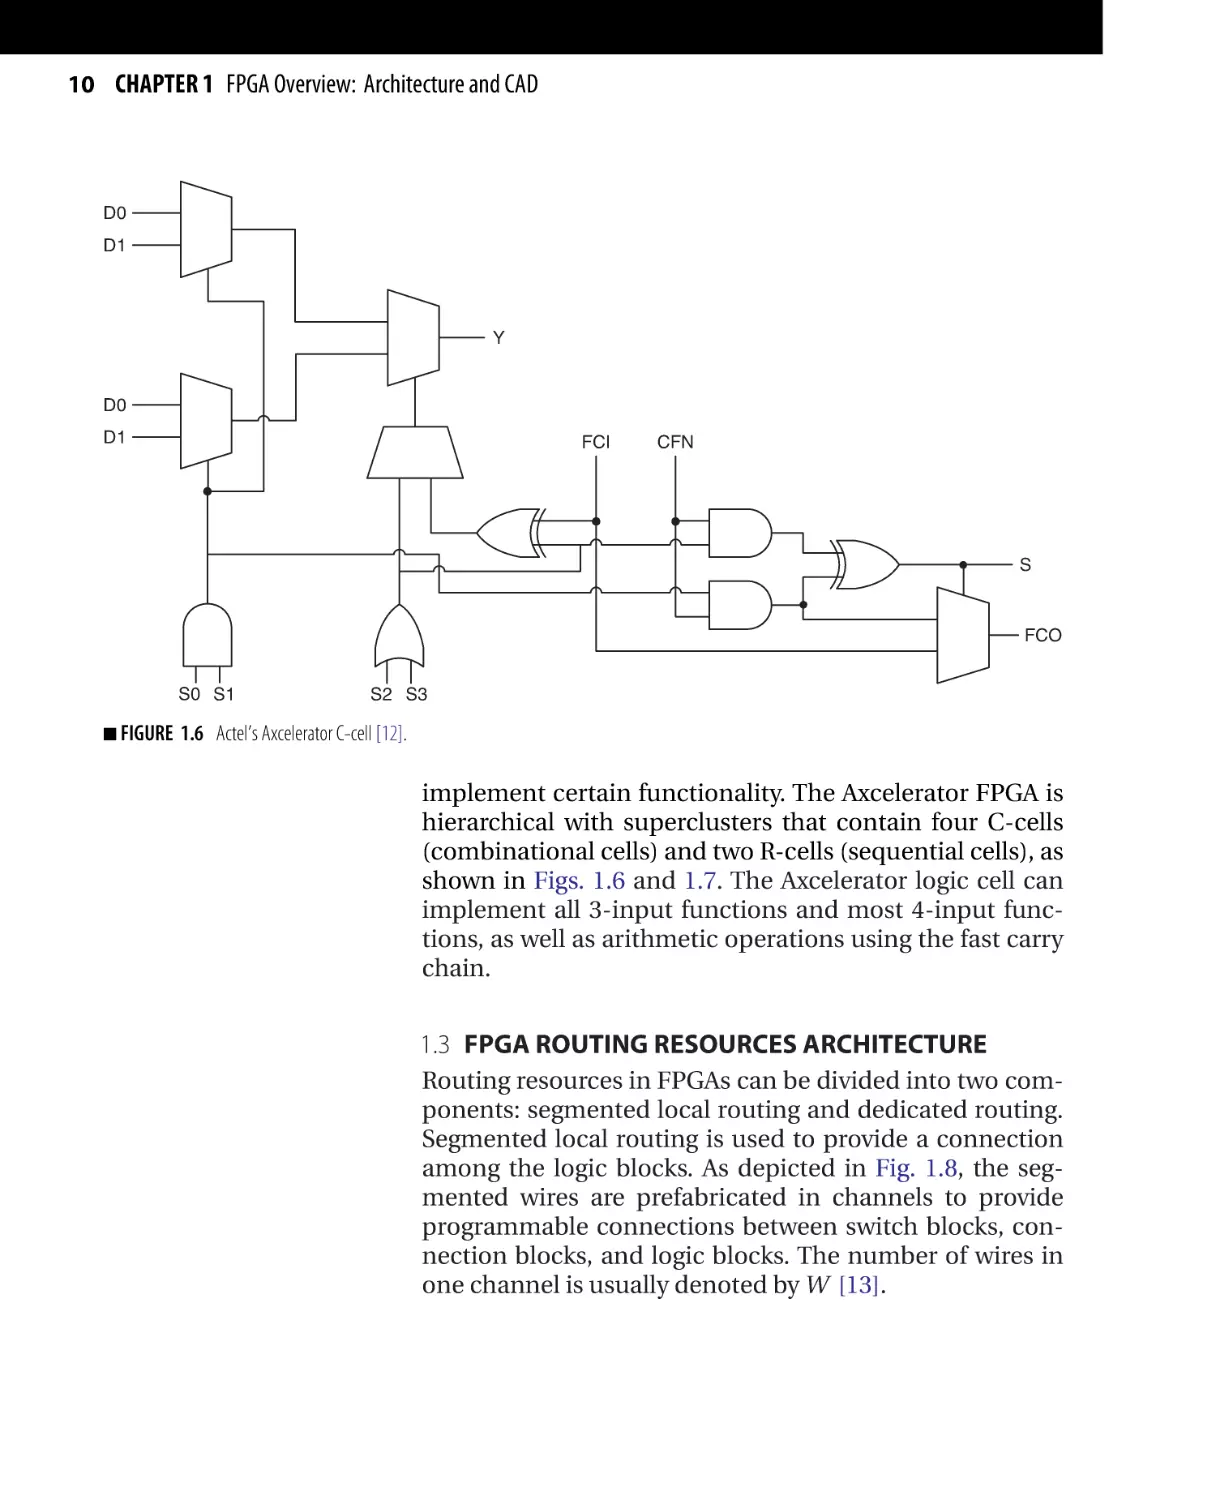 FPGA Routing Resources Architecture